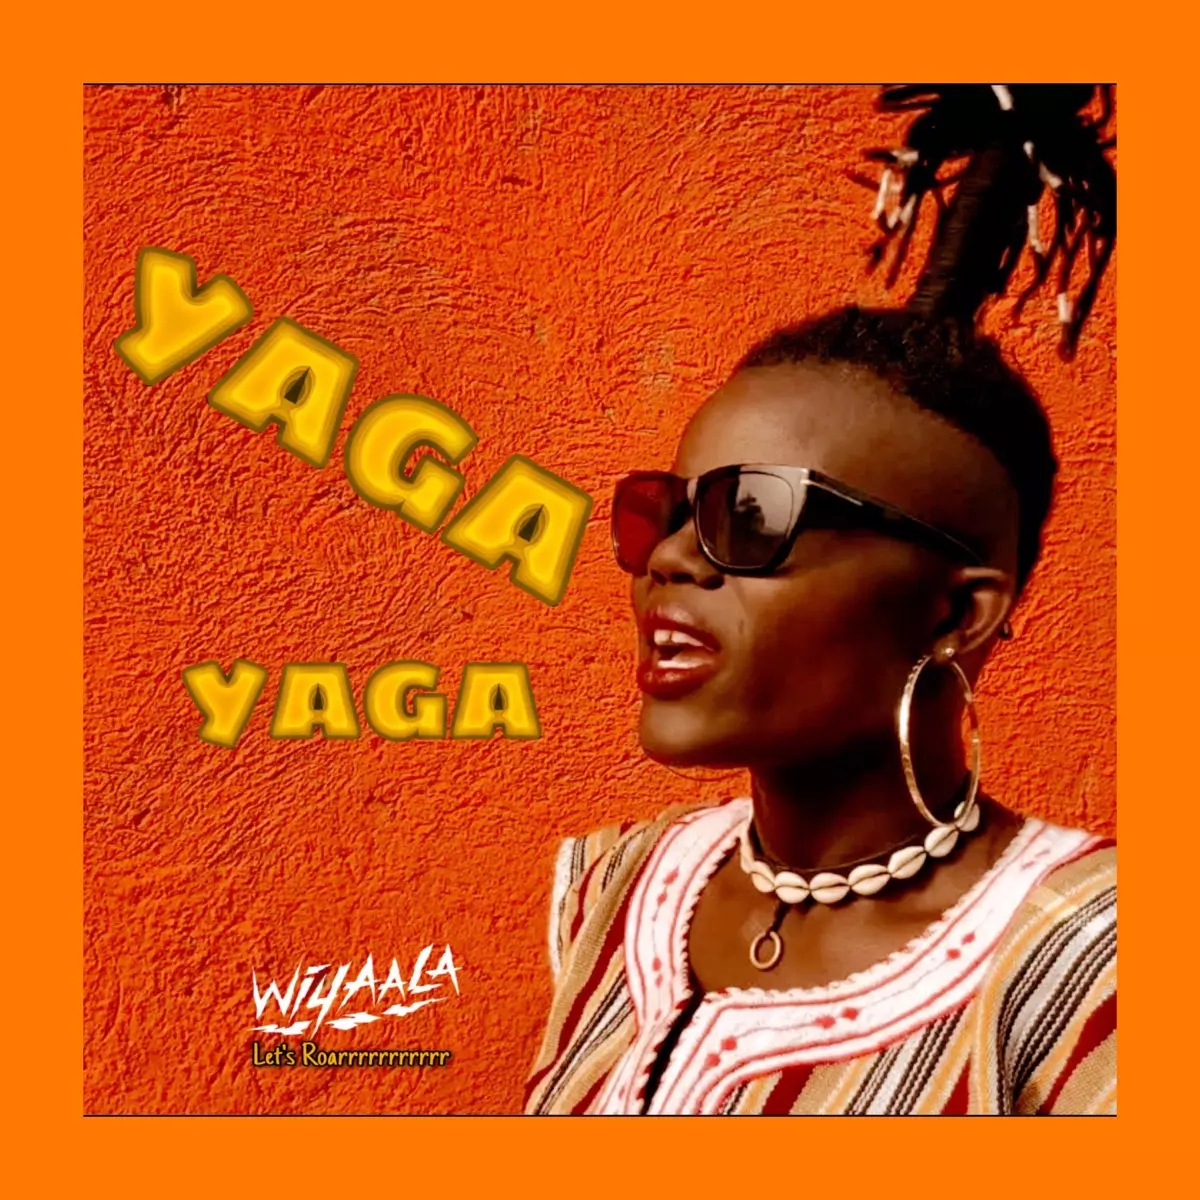 Africa - Single by Wiyaala on Apple Music